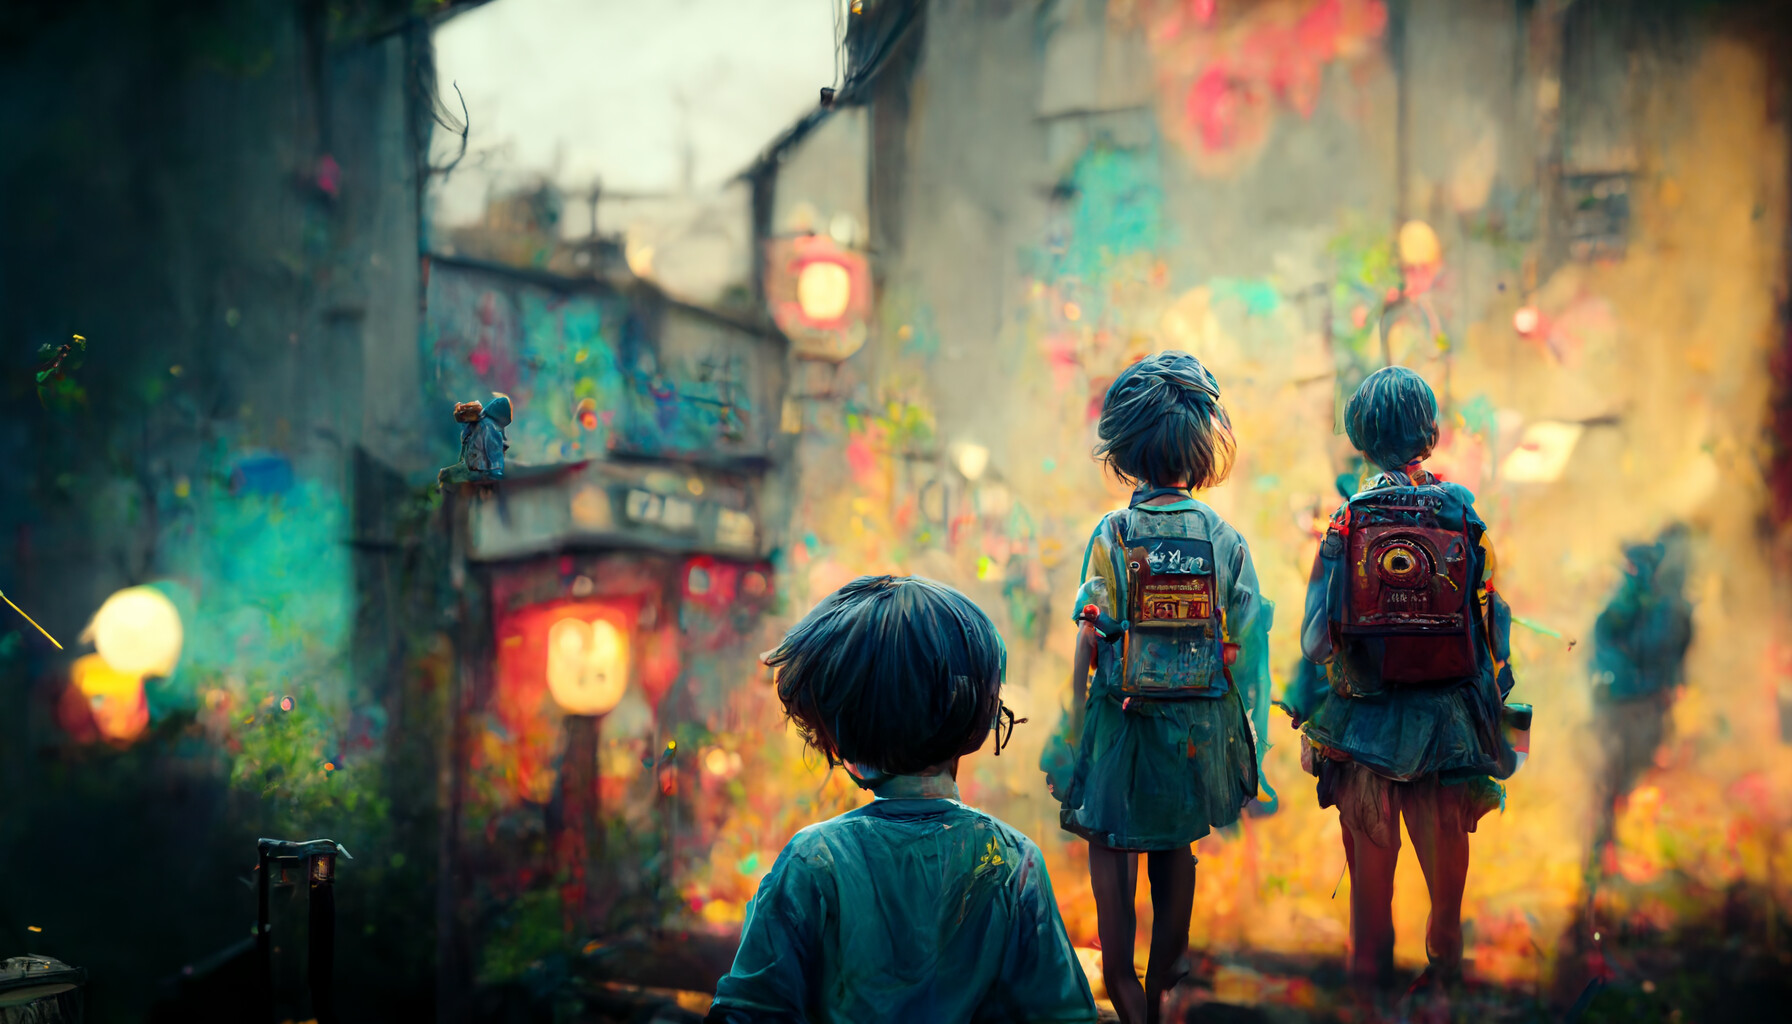 ArtStation - The Graffiti Kids